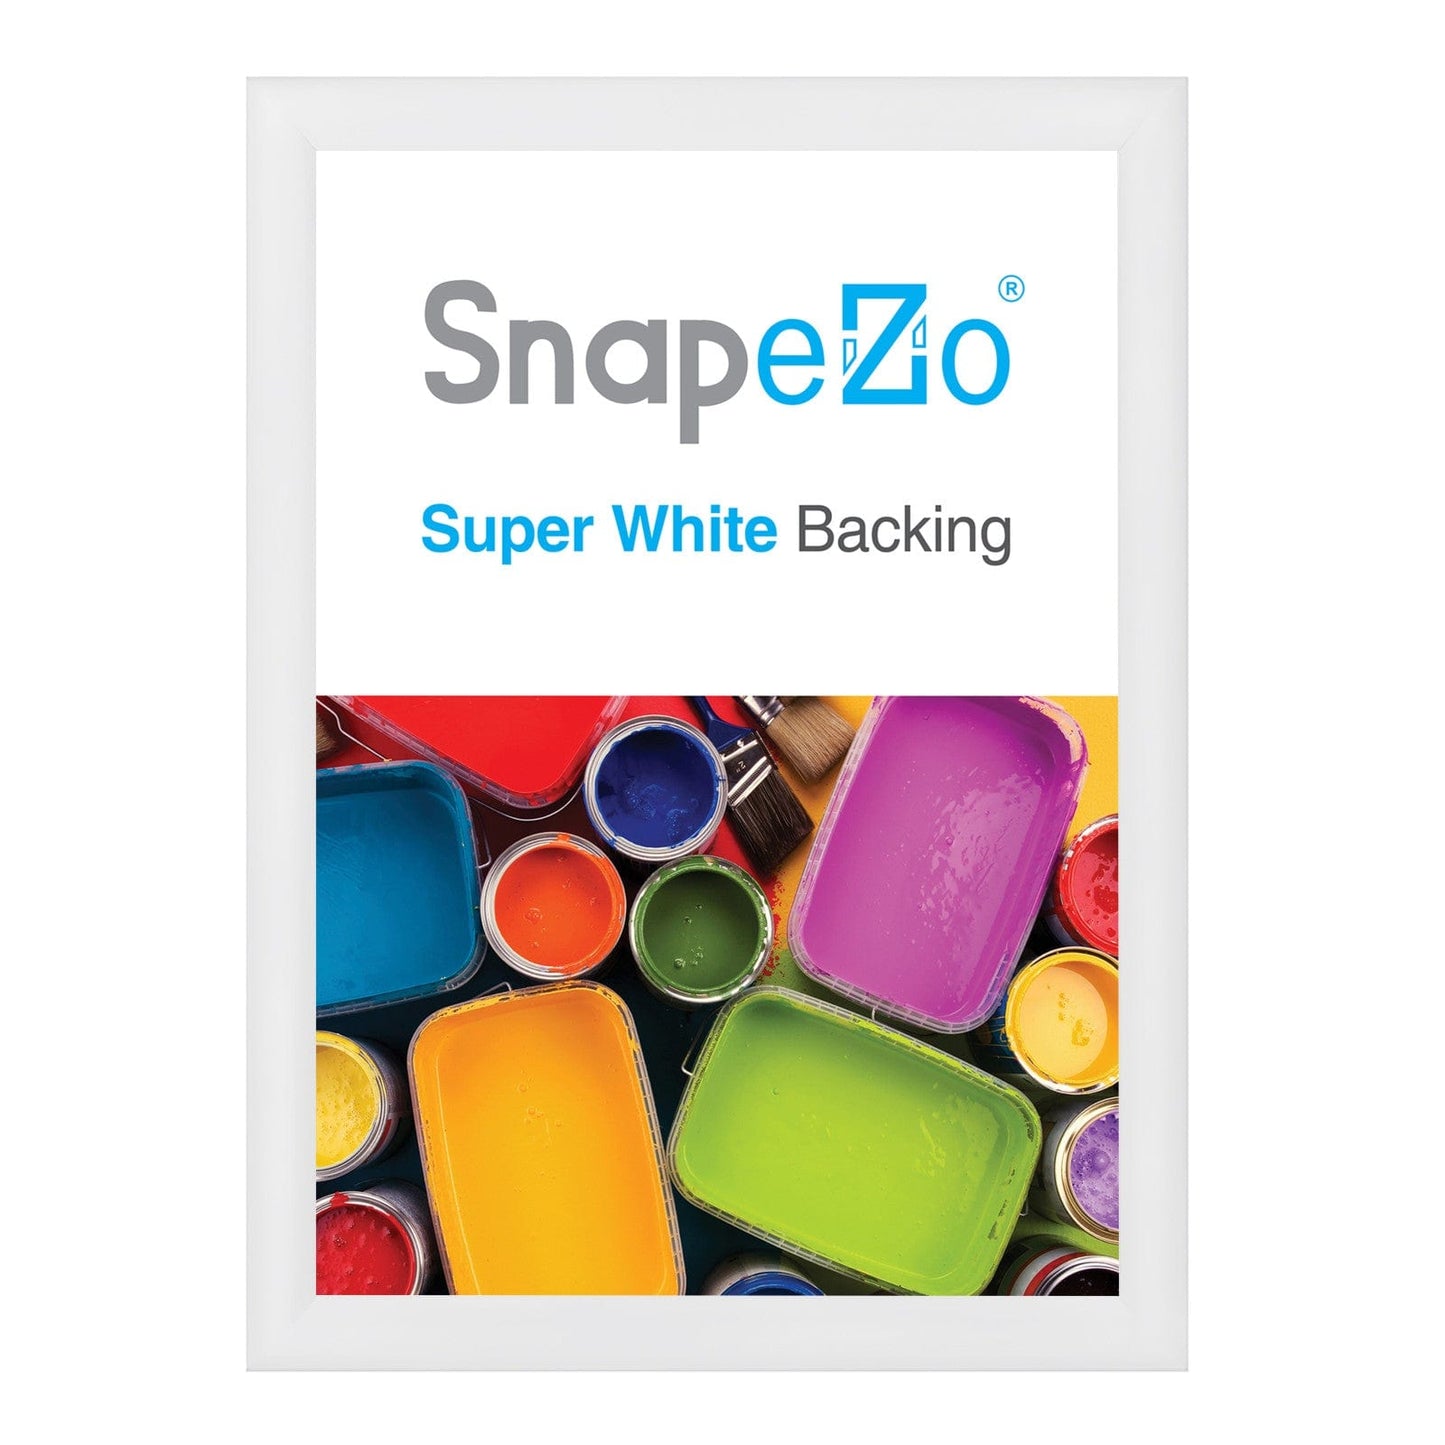 27x38 White SnapeZo® Snap Frame - 1.2" Profile - Snap Frames Direct